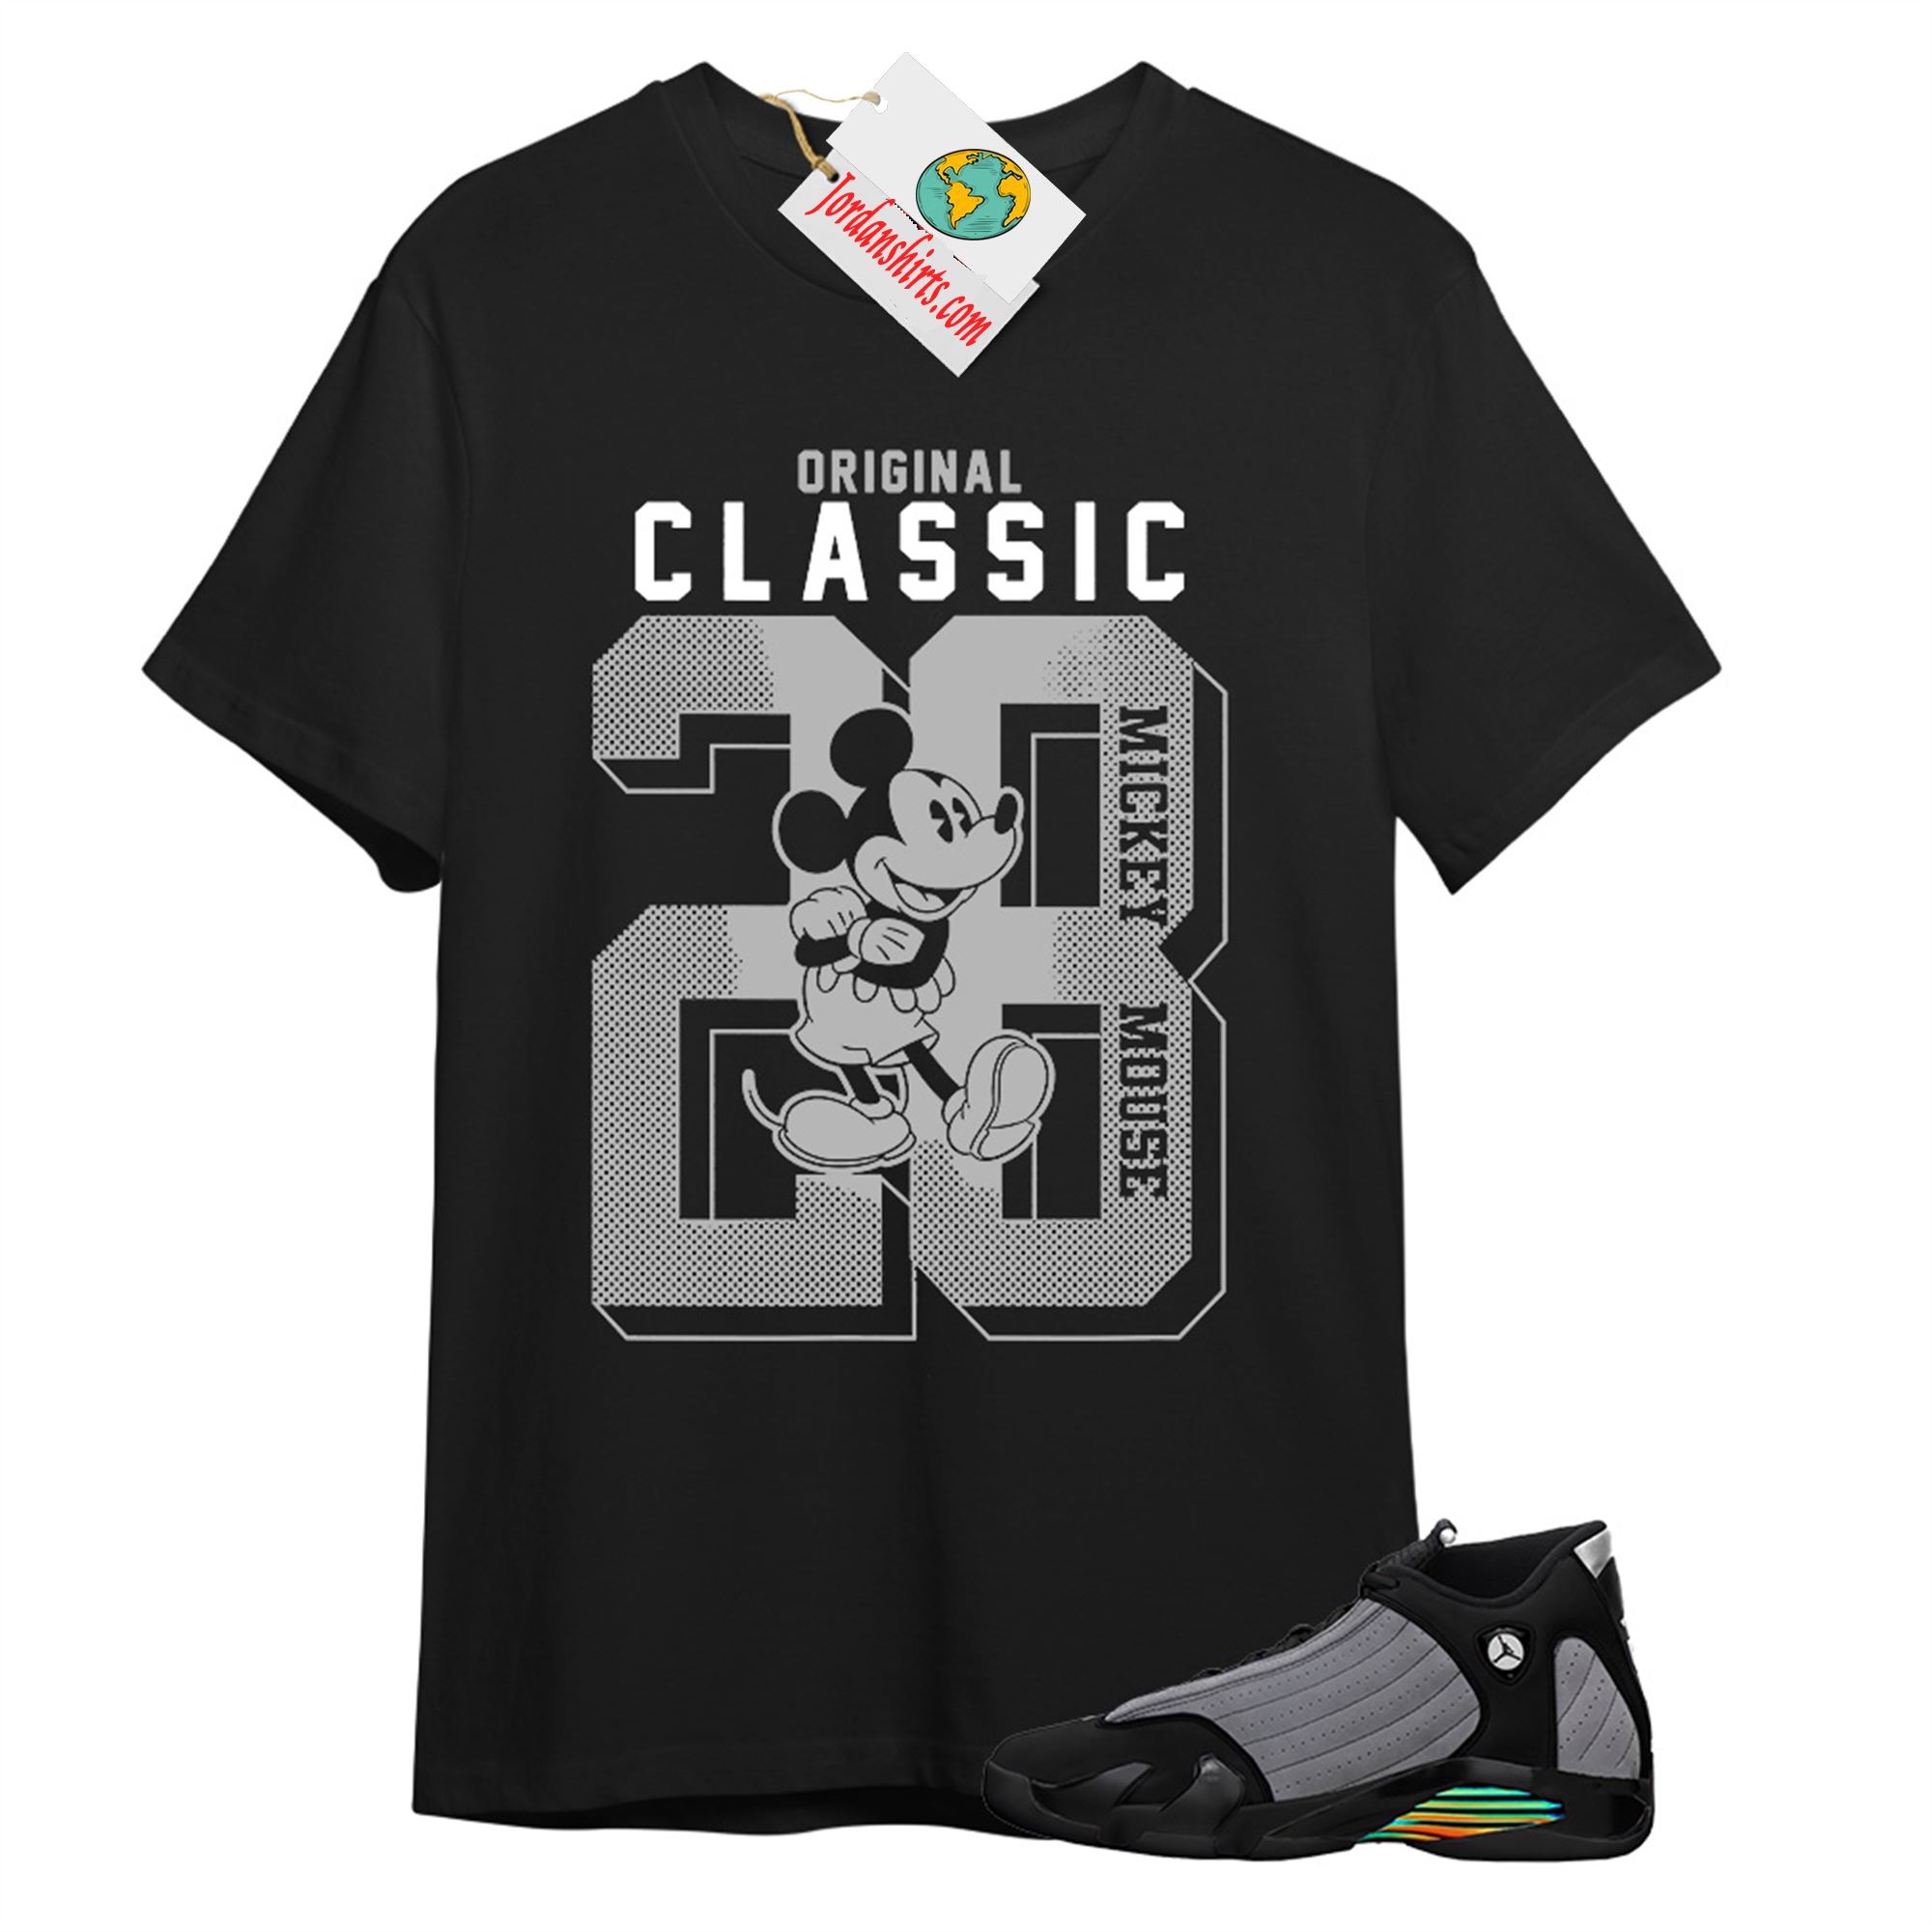 Jordan 14 Shirt, Disney Mickey Mouse Classic 28 Black T-shirt Air Jordan 14 Black Particle Grey 14s Plus Size Up To 5xl